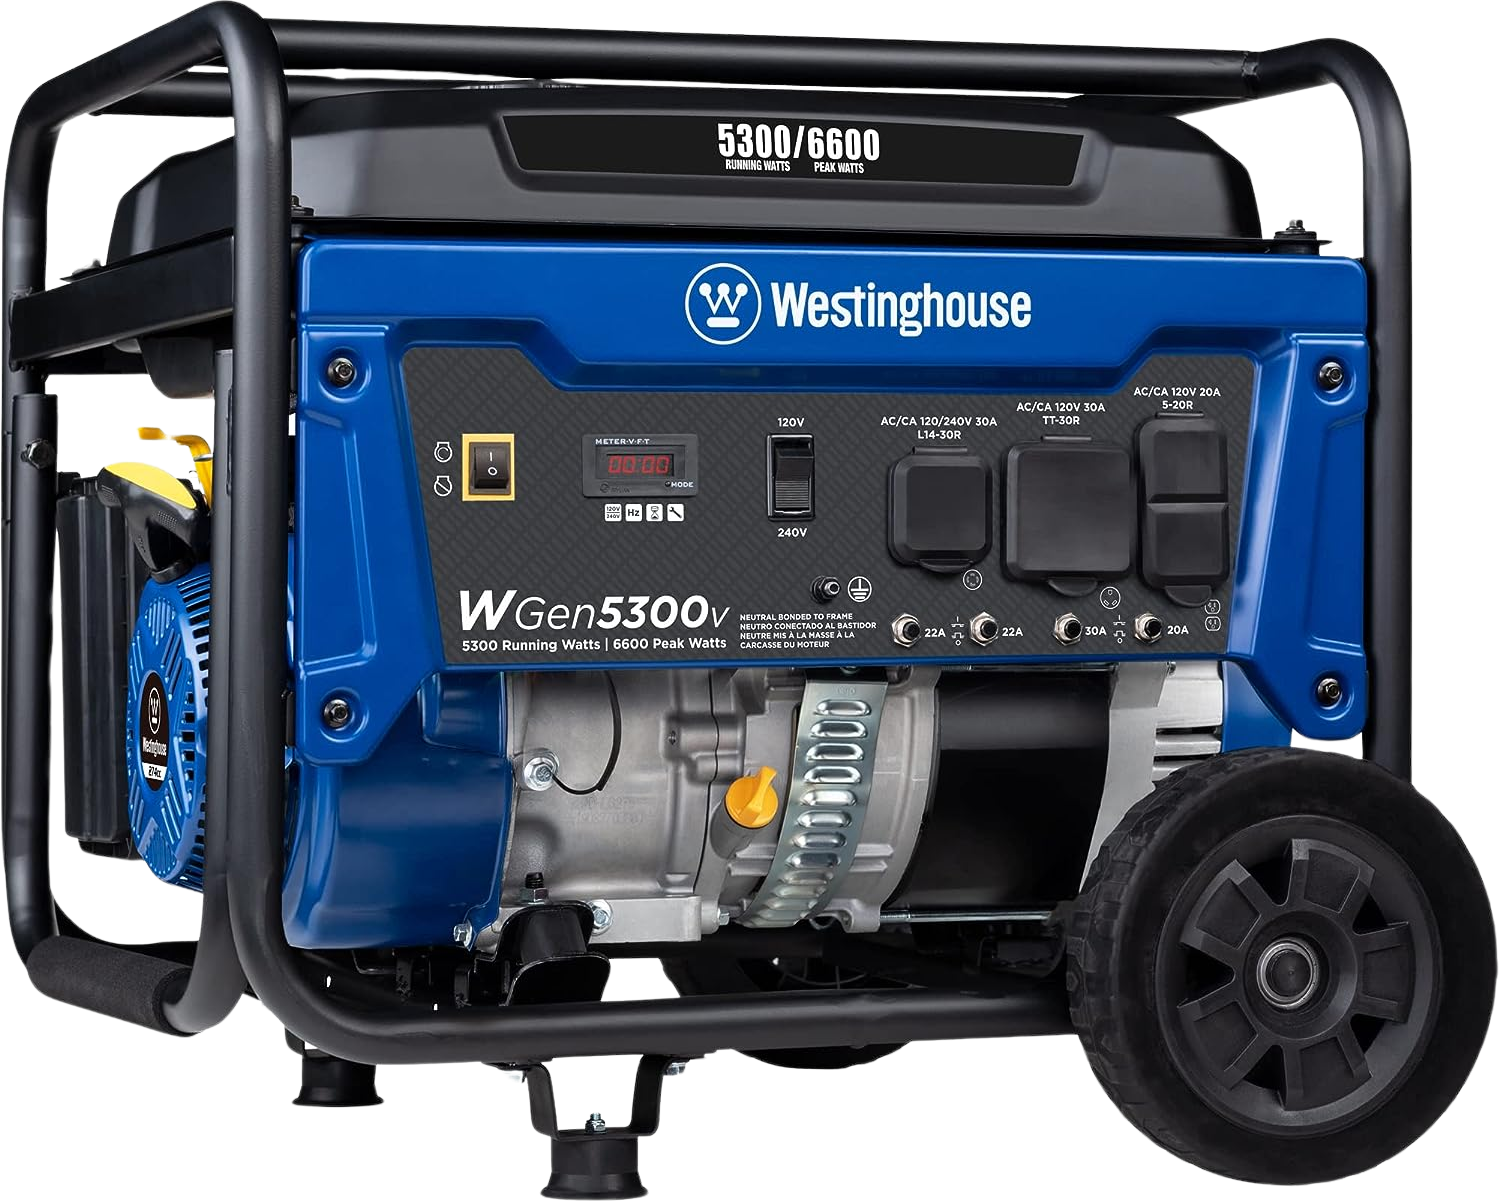 Westinghouse WGen5300v Generator 5300W/6600W 30 Amp Recoil Start Gas New